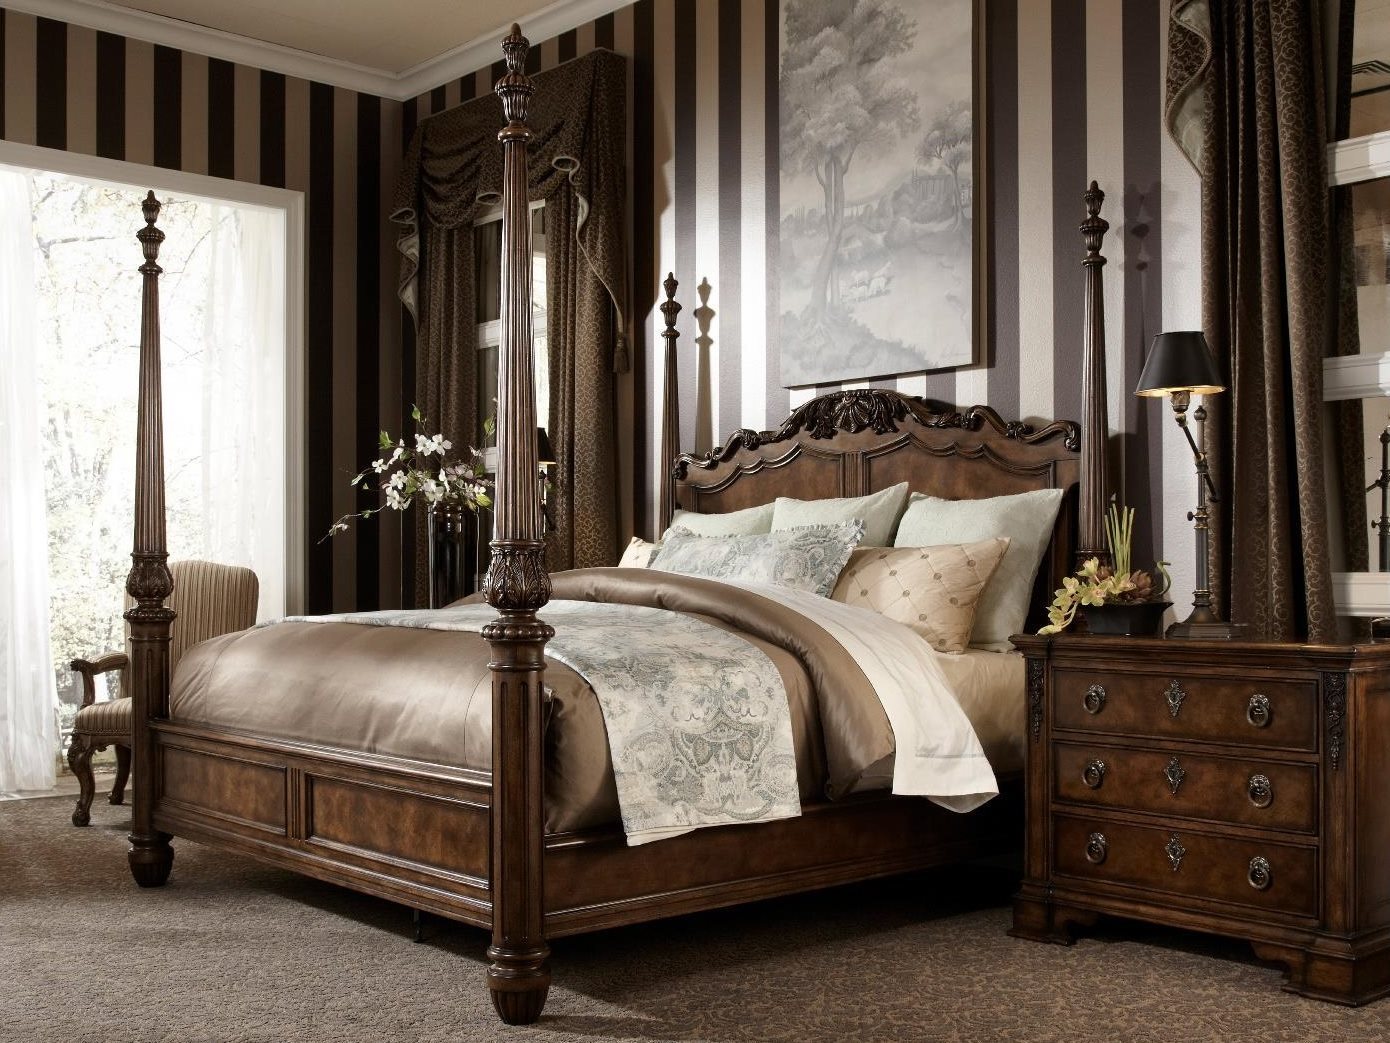 max fine bedroom furniture set